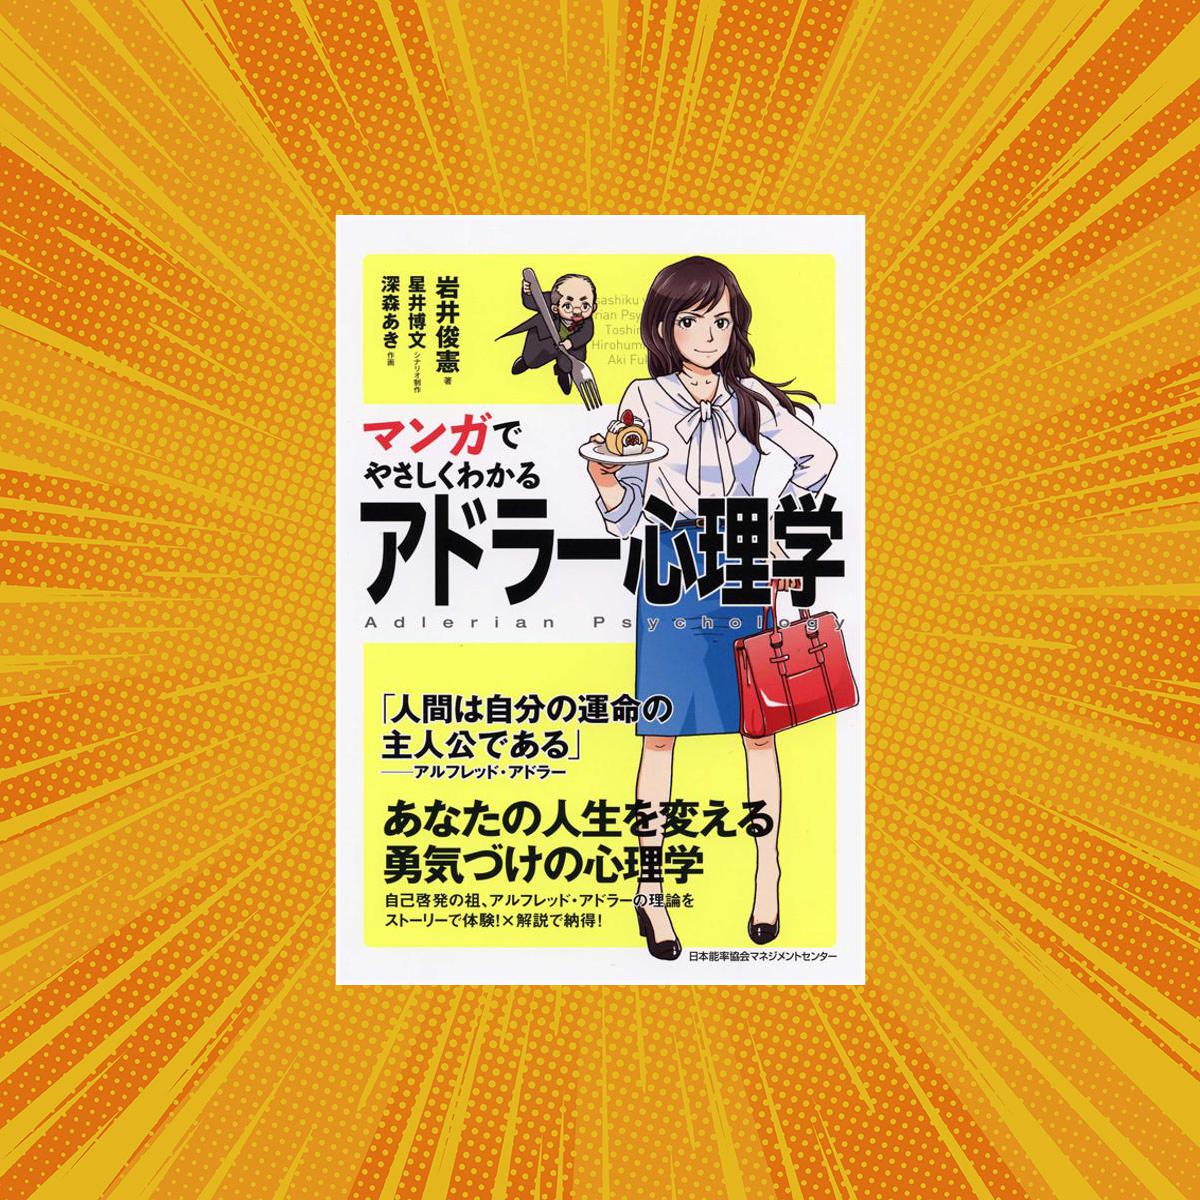 Easy reading through Manga | Adlerian Psychology